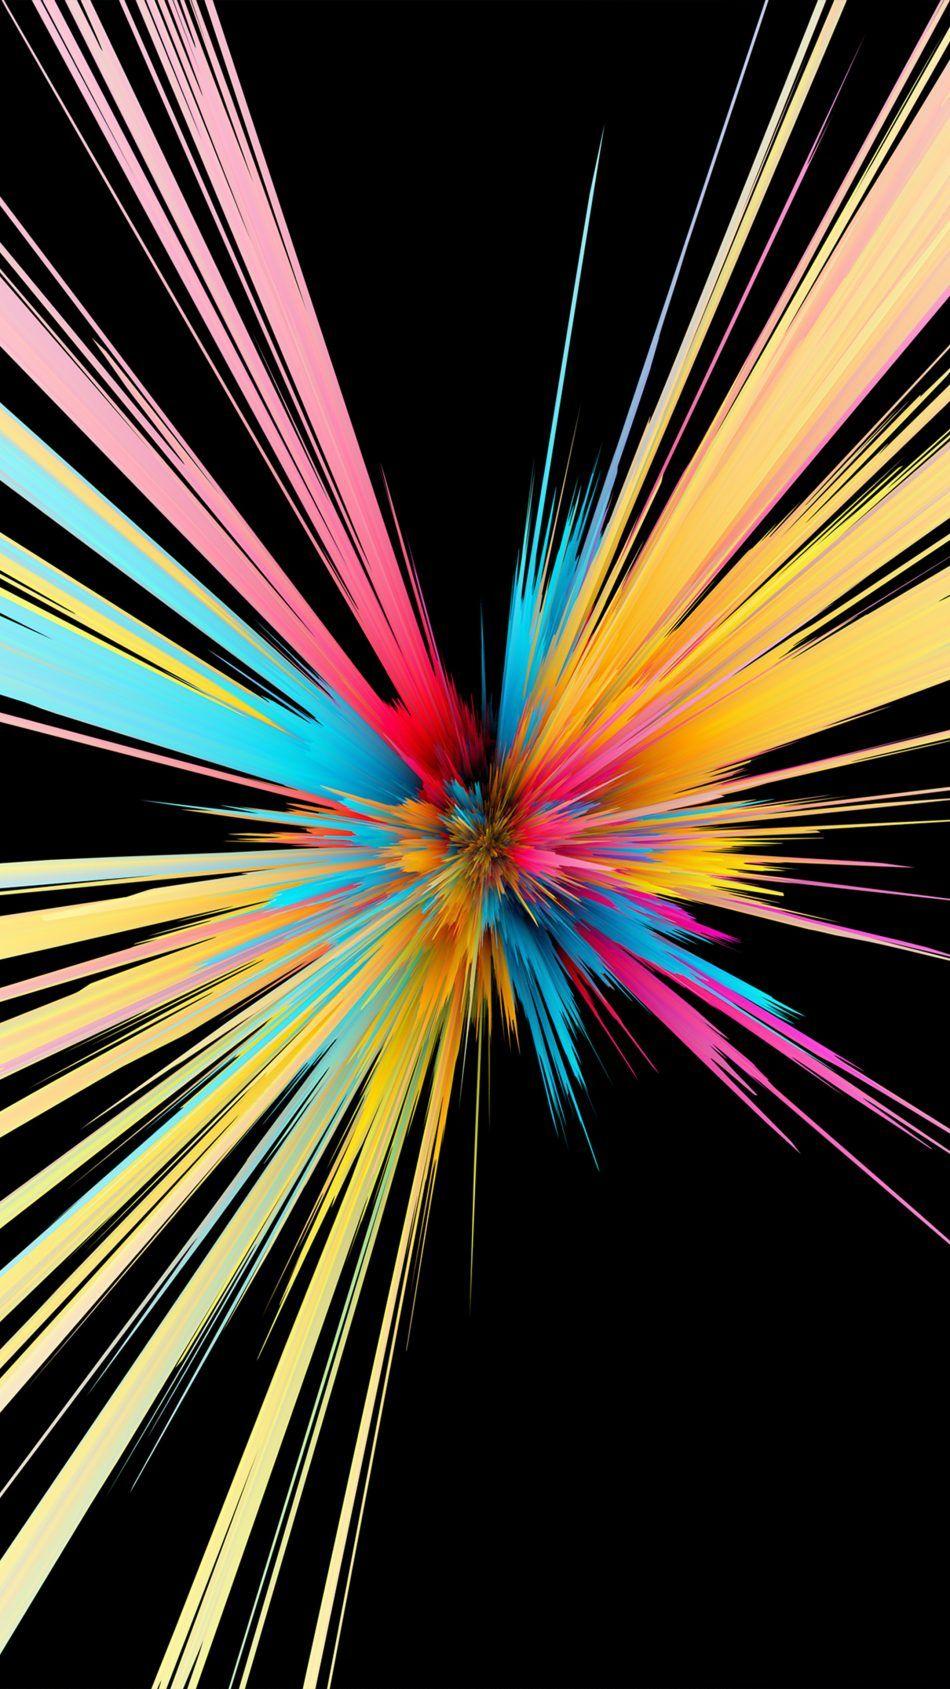 Colorful Particles Explosion Black Background 4K Ultra HD Mobile Wallpaper. Black wallpaper, Wallpaper, Ultra HD 4k wallpaper